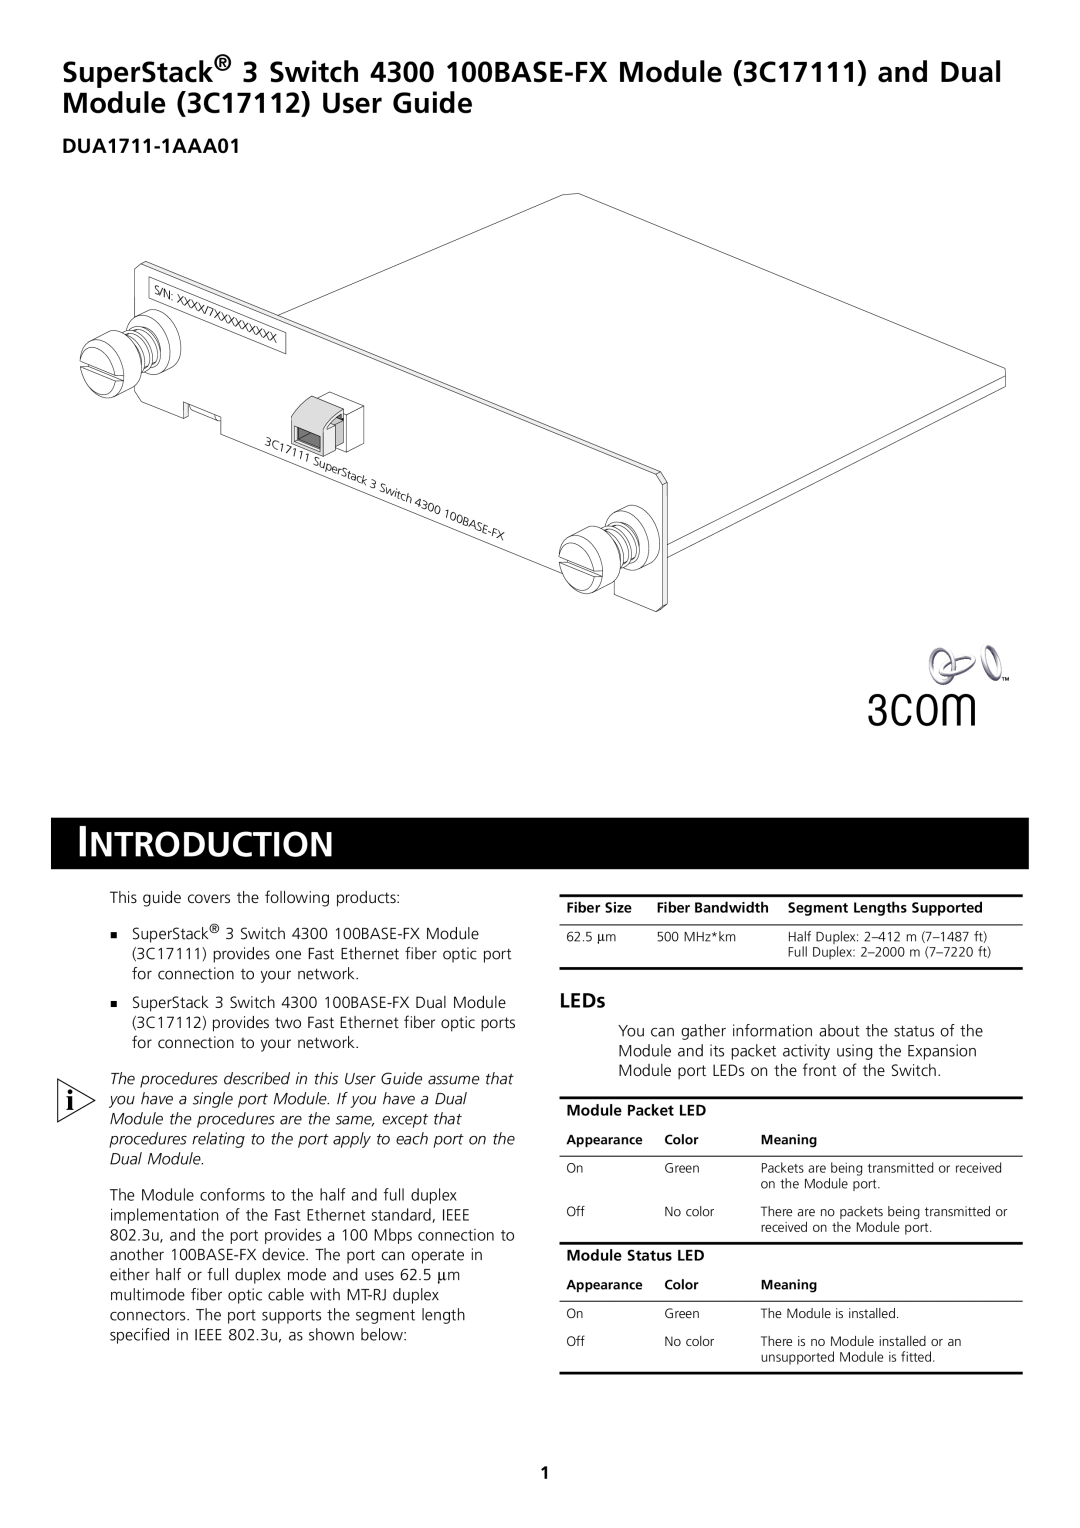 3Com DUA1711-1AAA01 manual Introduction, LEDs 